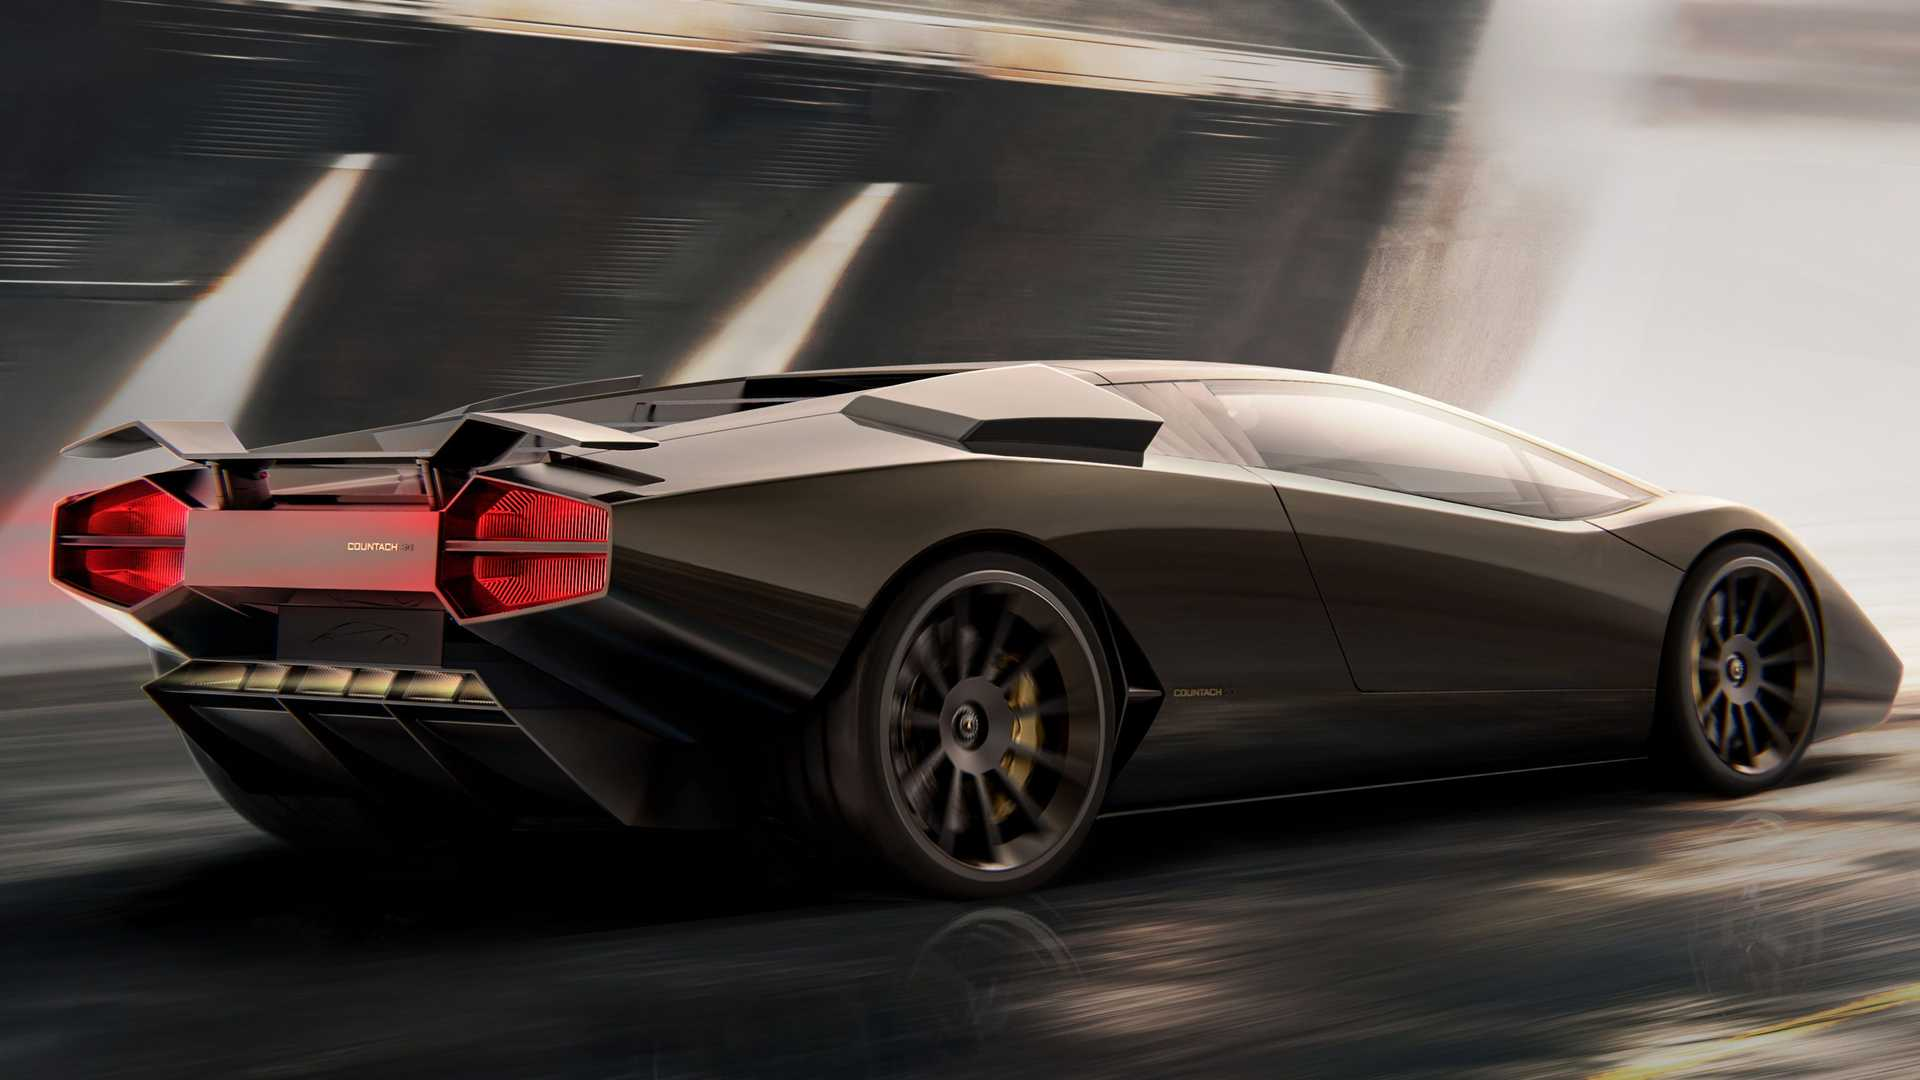 This is how the modern Lamborghini Countach looks like